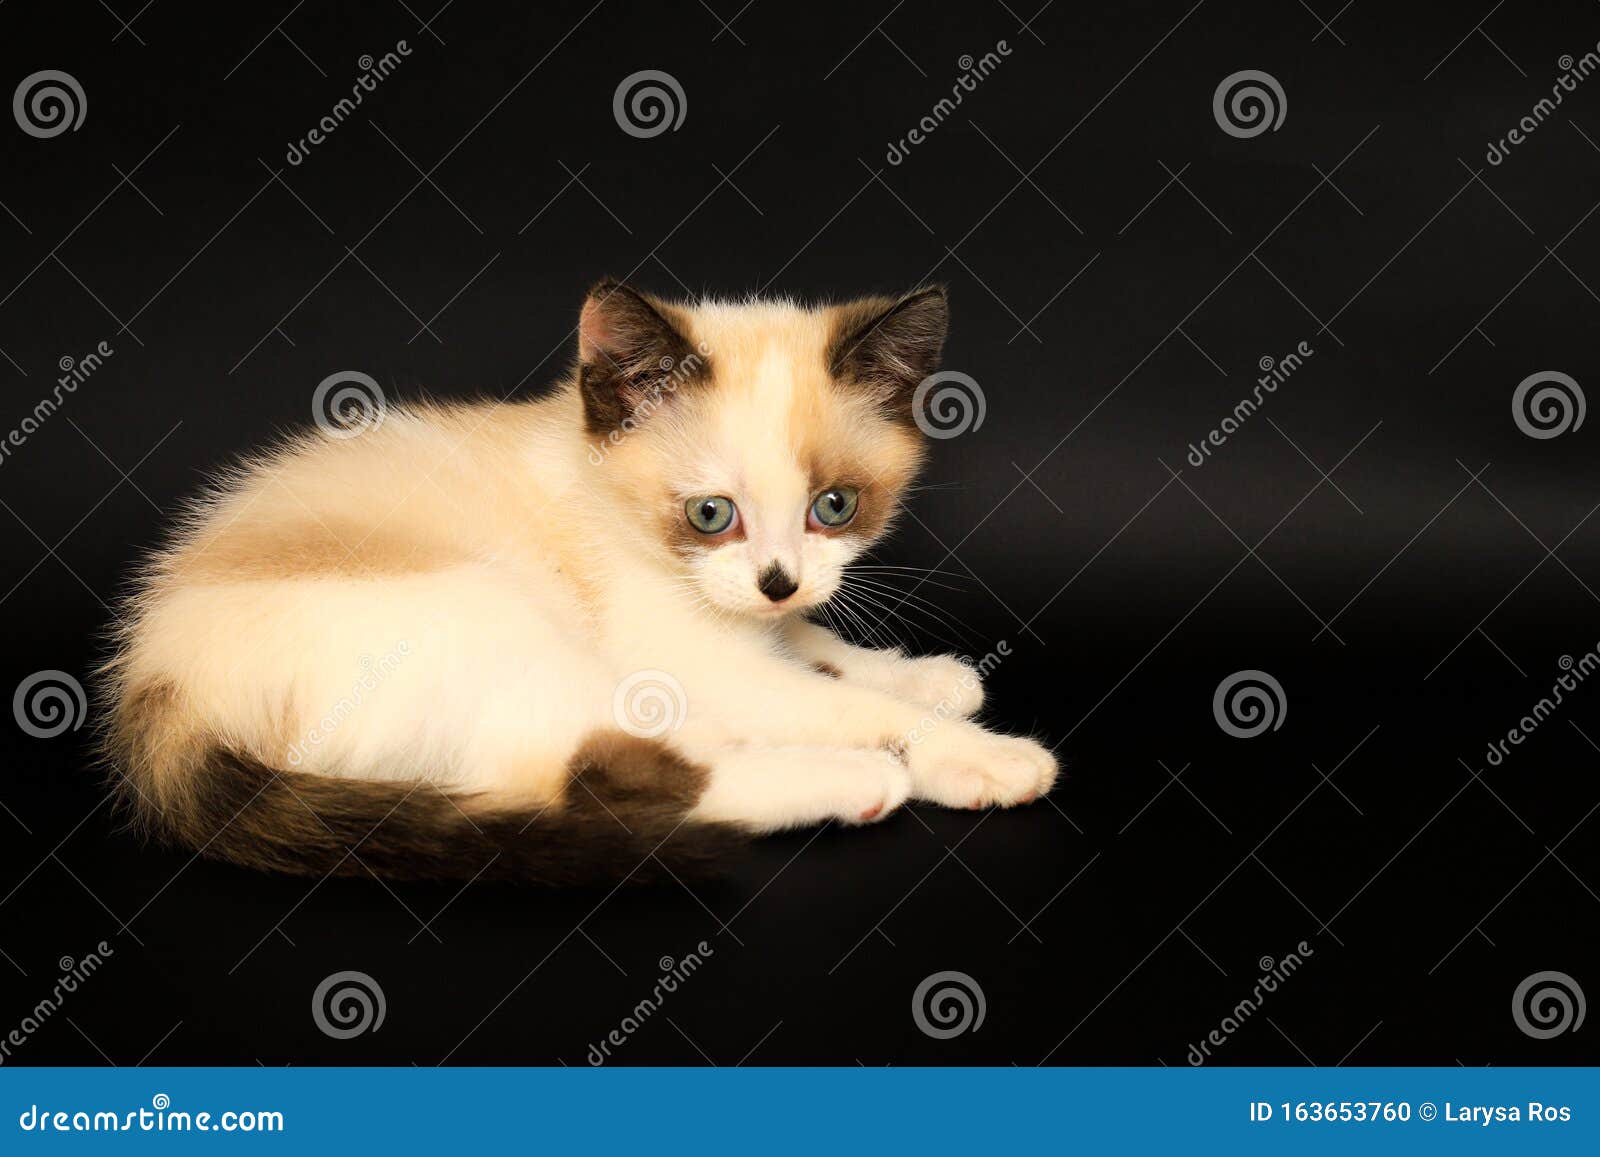 Cute White Kitten with Brown Ears, British Shorthair, Lies on a Black ...